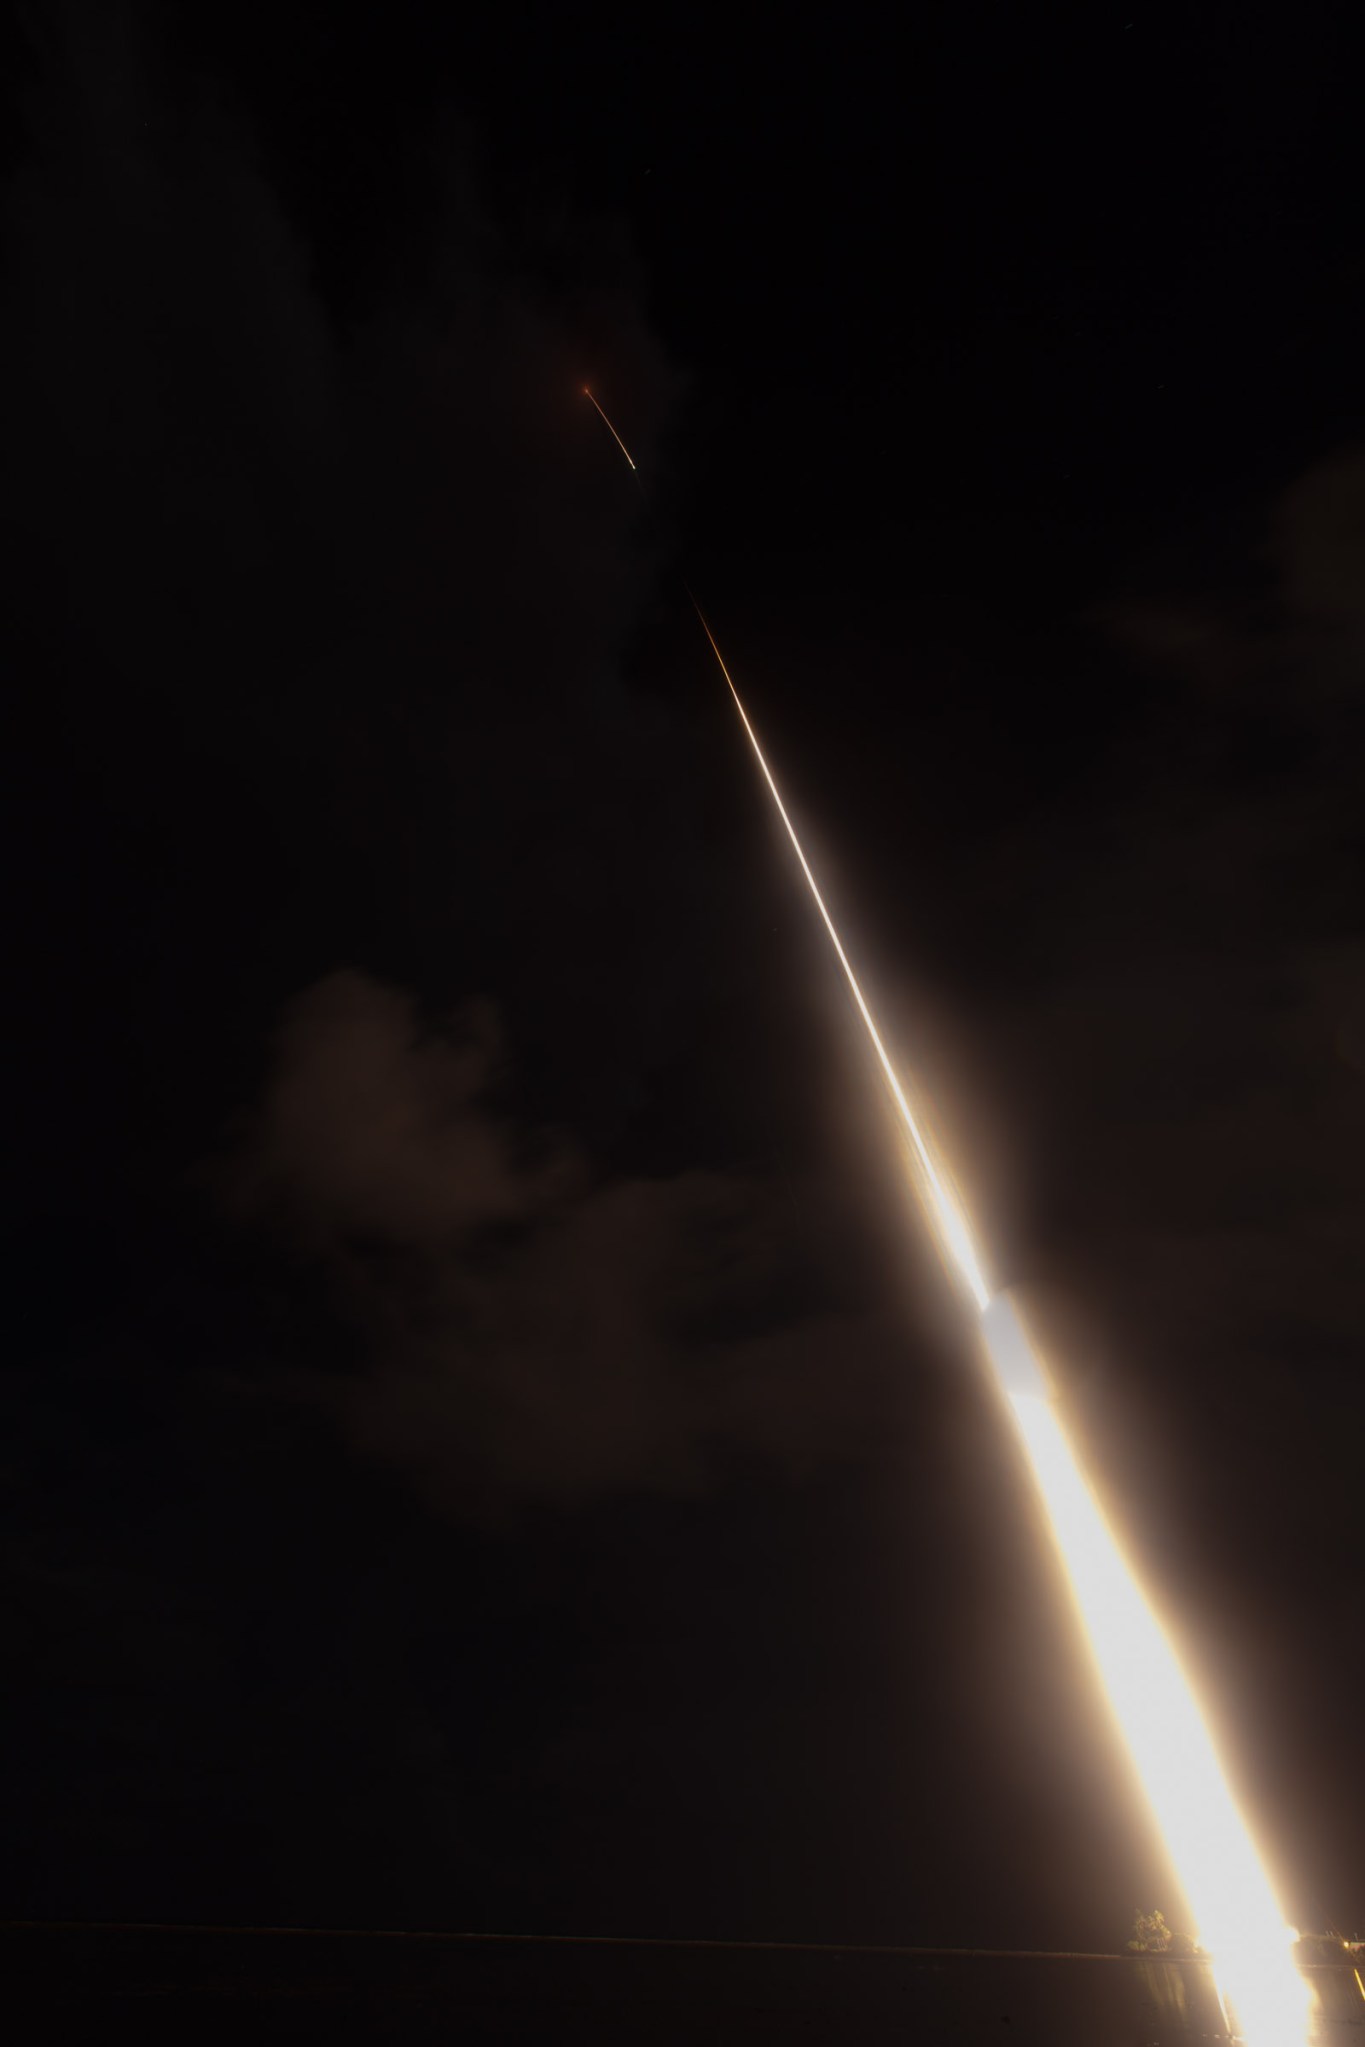 Long exposure photo of a sounding rocket launch.